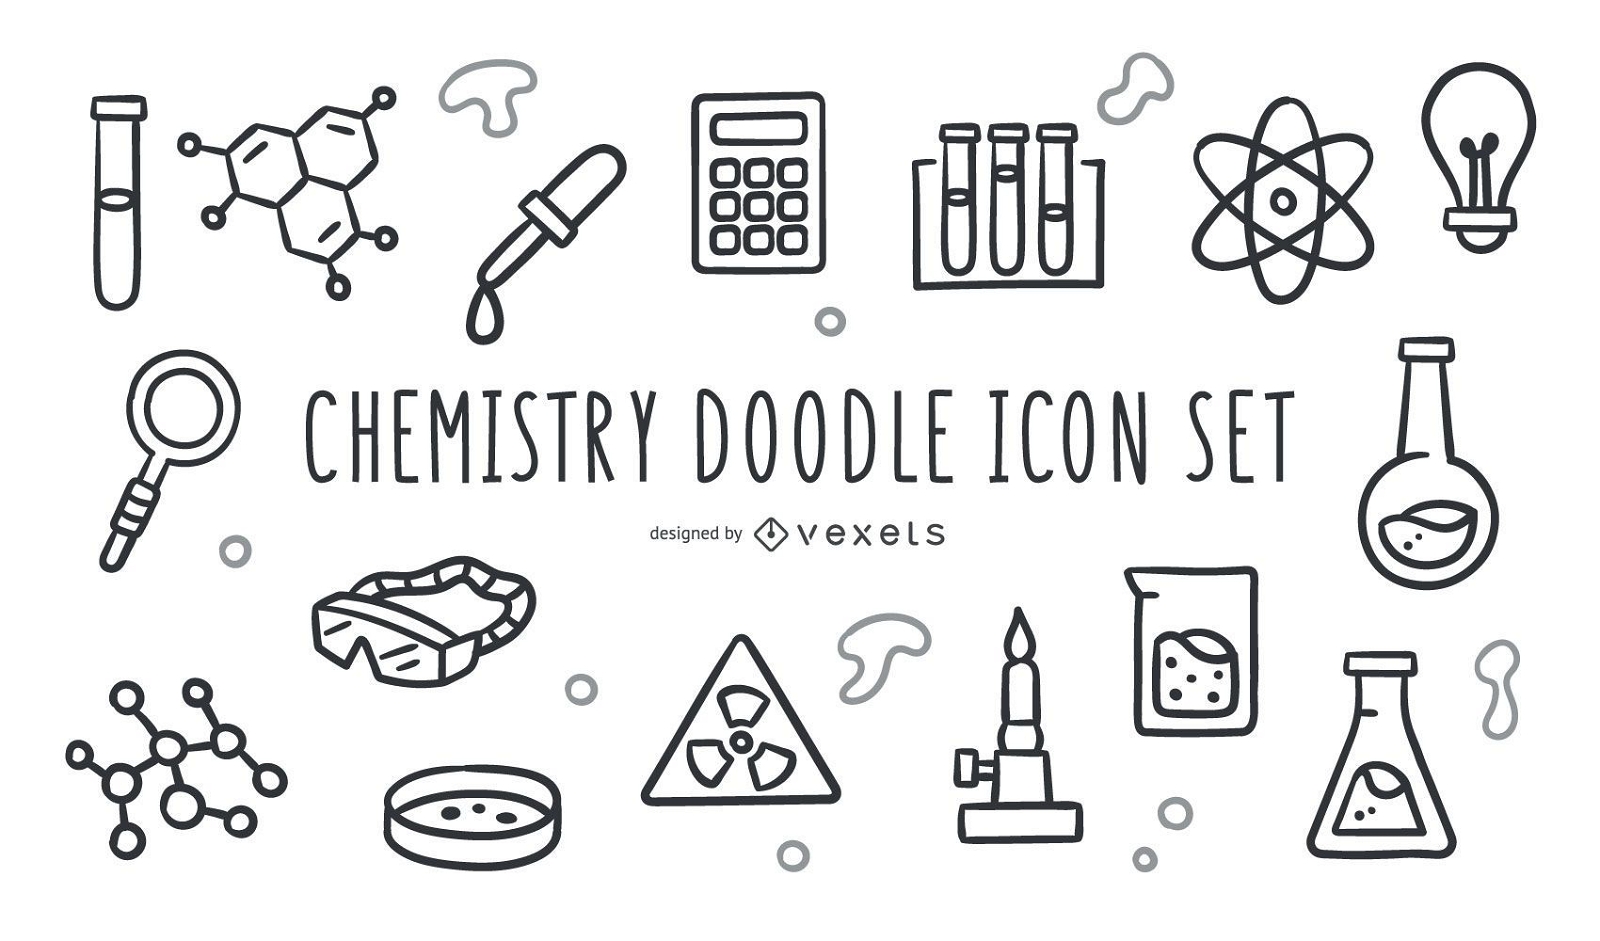 Chemistry doodle icon set